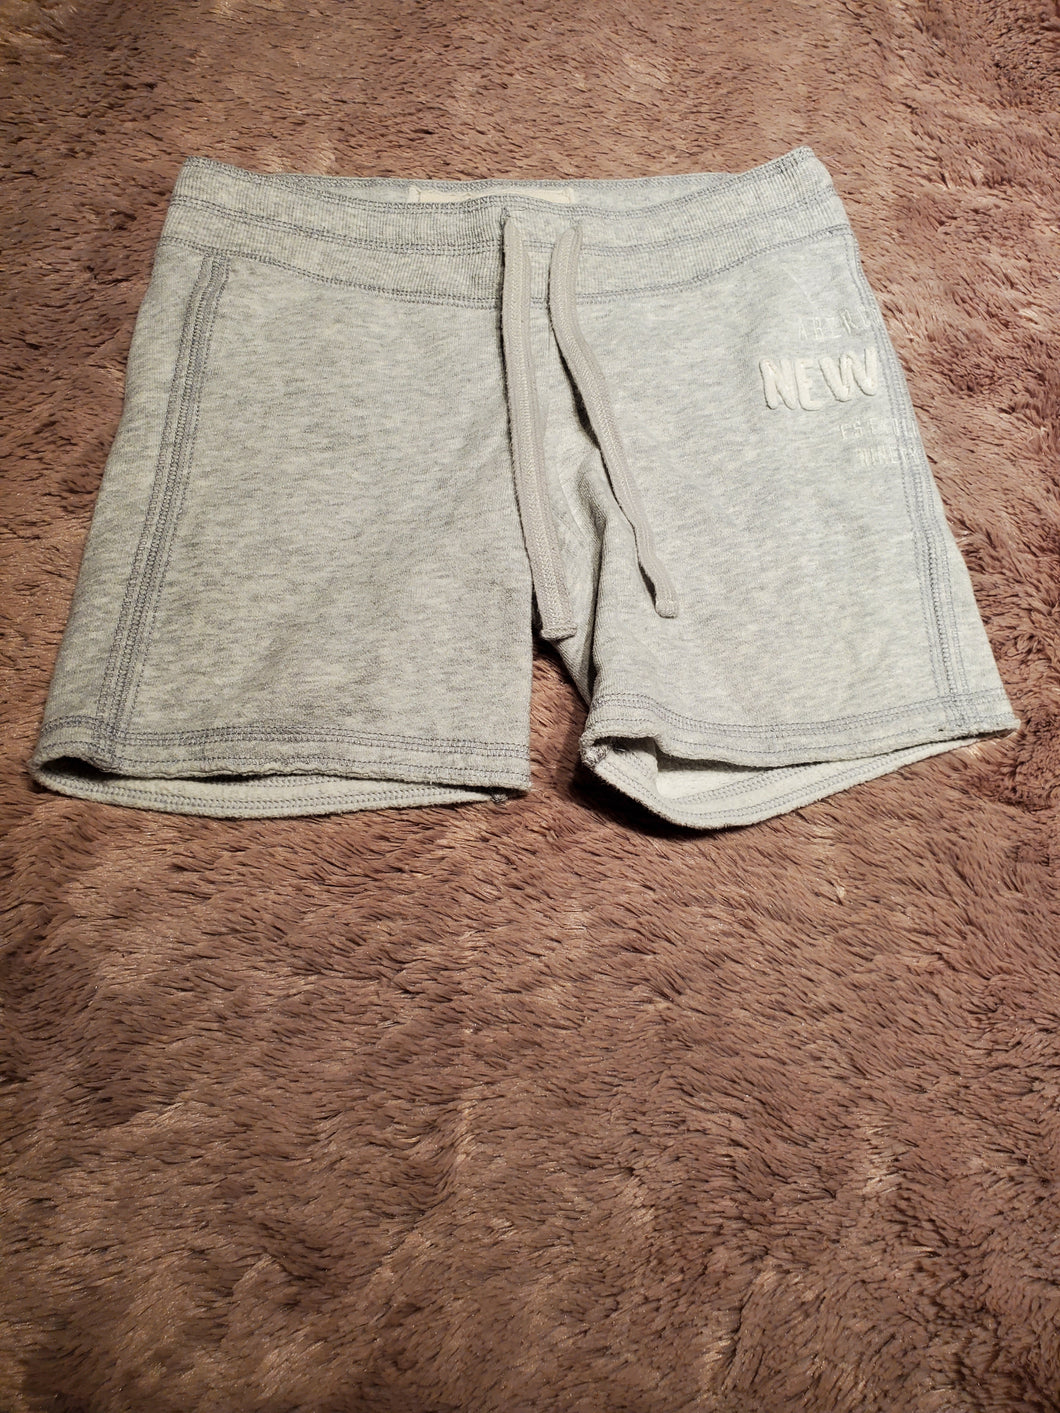 Abercrombie gray New York sweatpants shorts Small